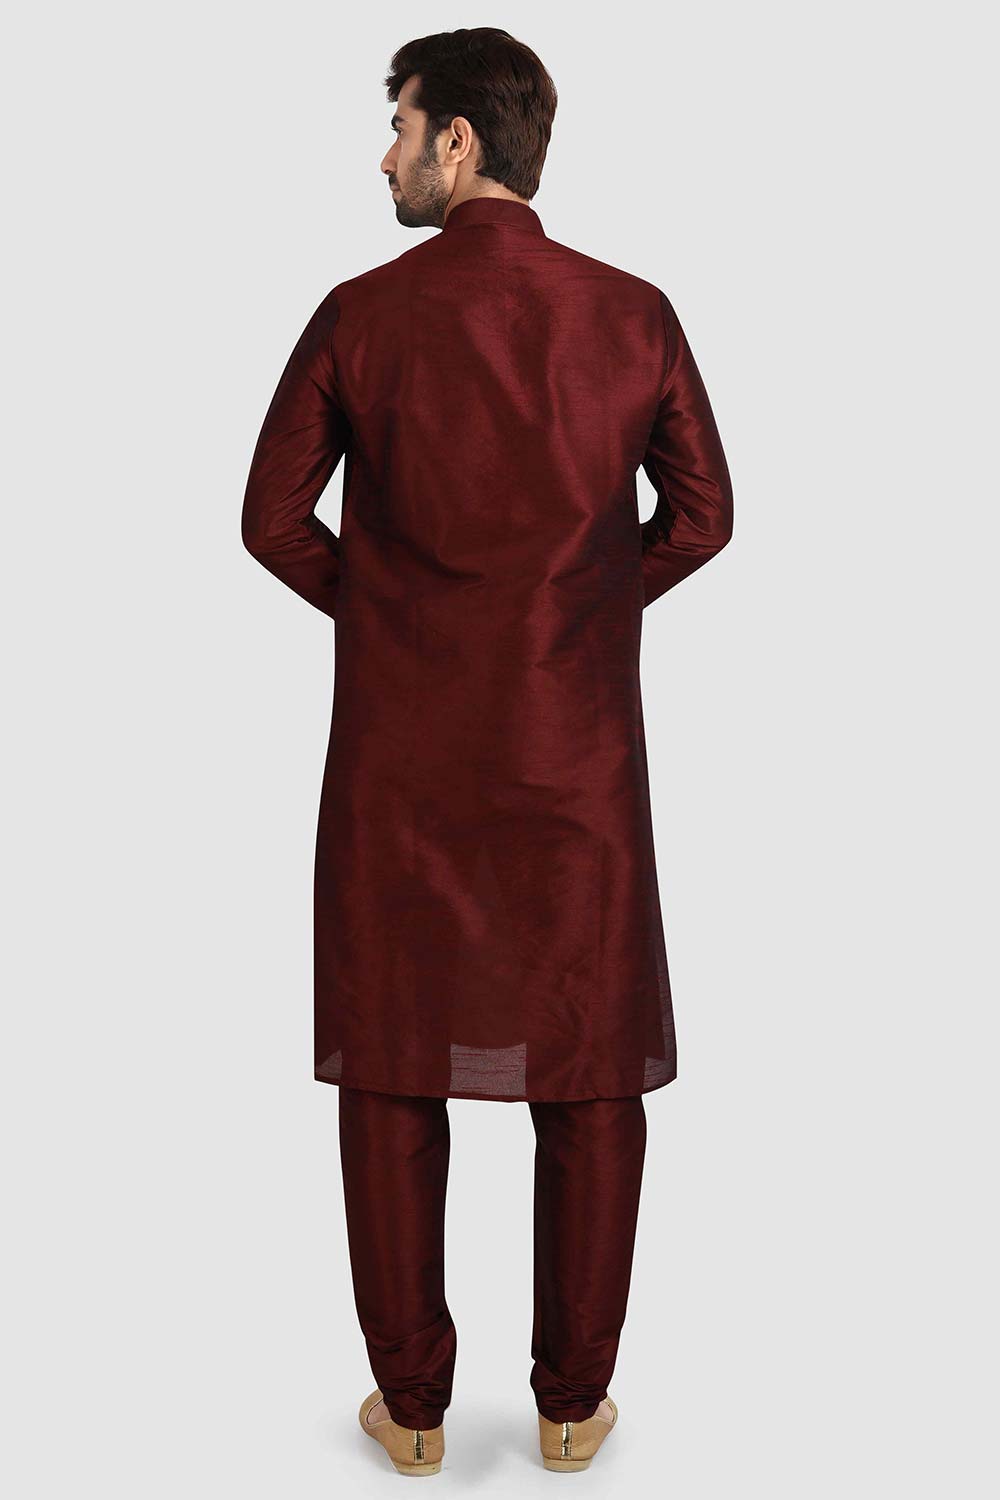 Buy Maroon Art Dupion Silk Plain Kurta Pajama Online - Karmaplace